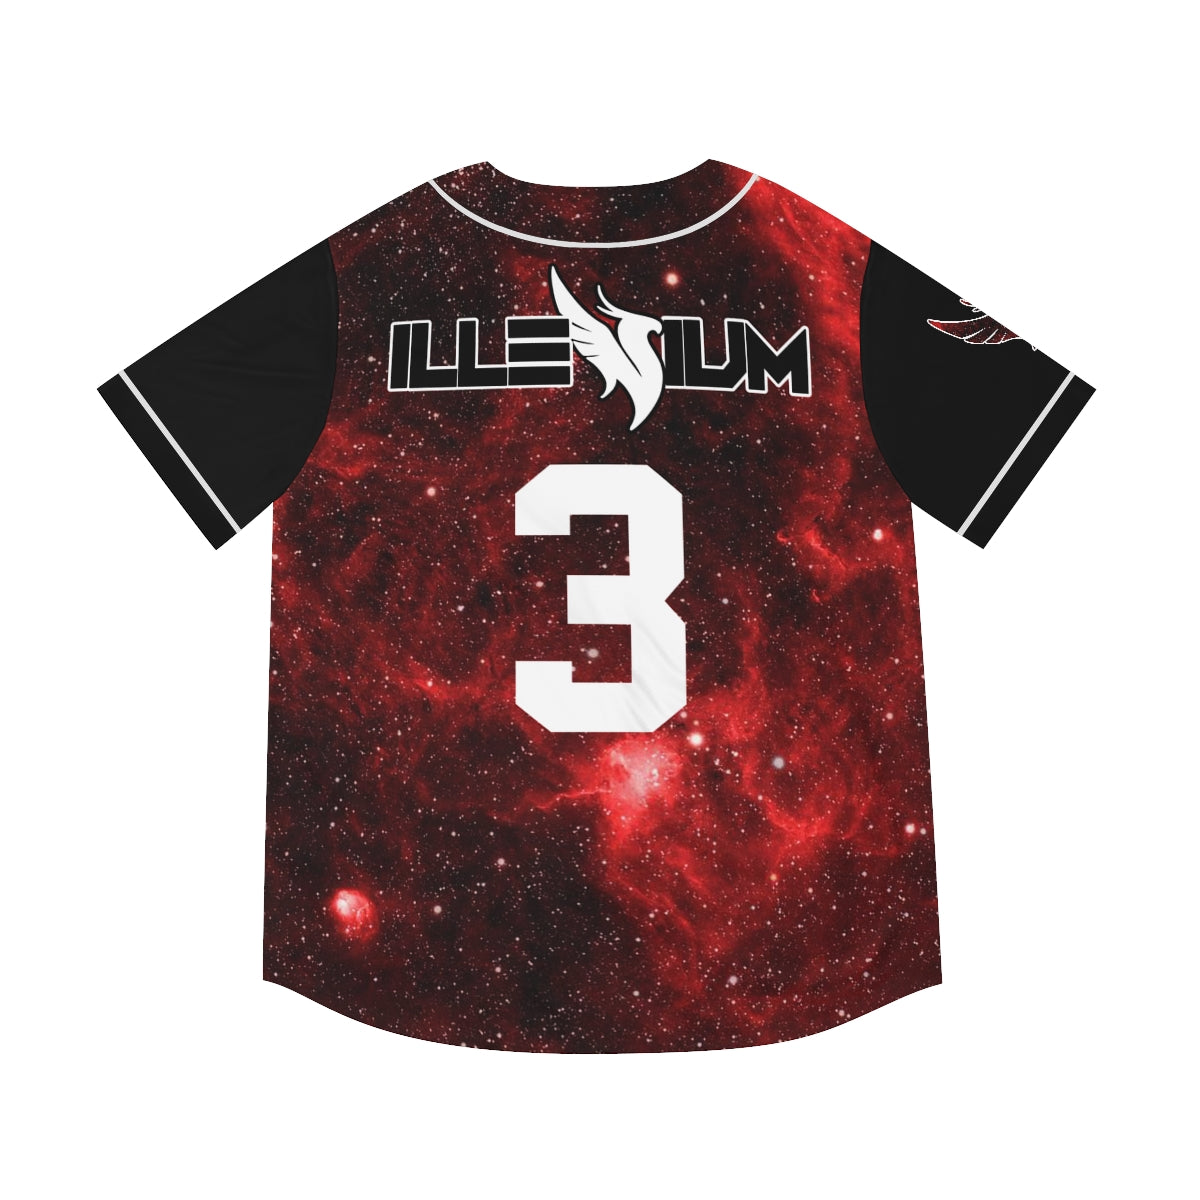 Illenium Jersey (Red Galaxy)